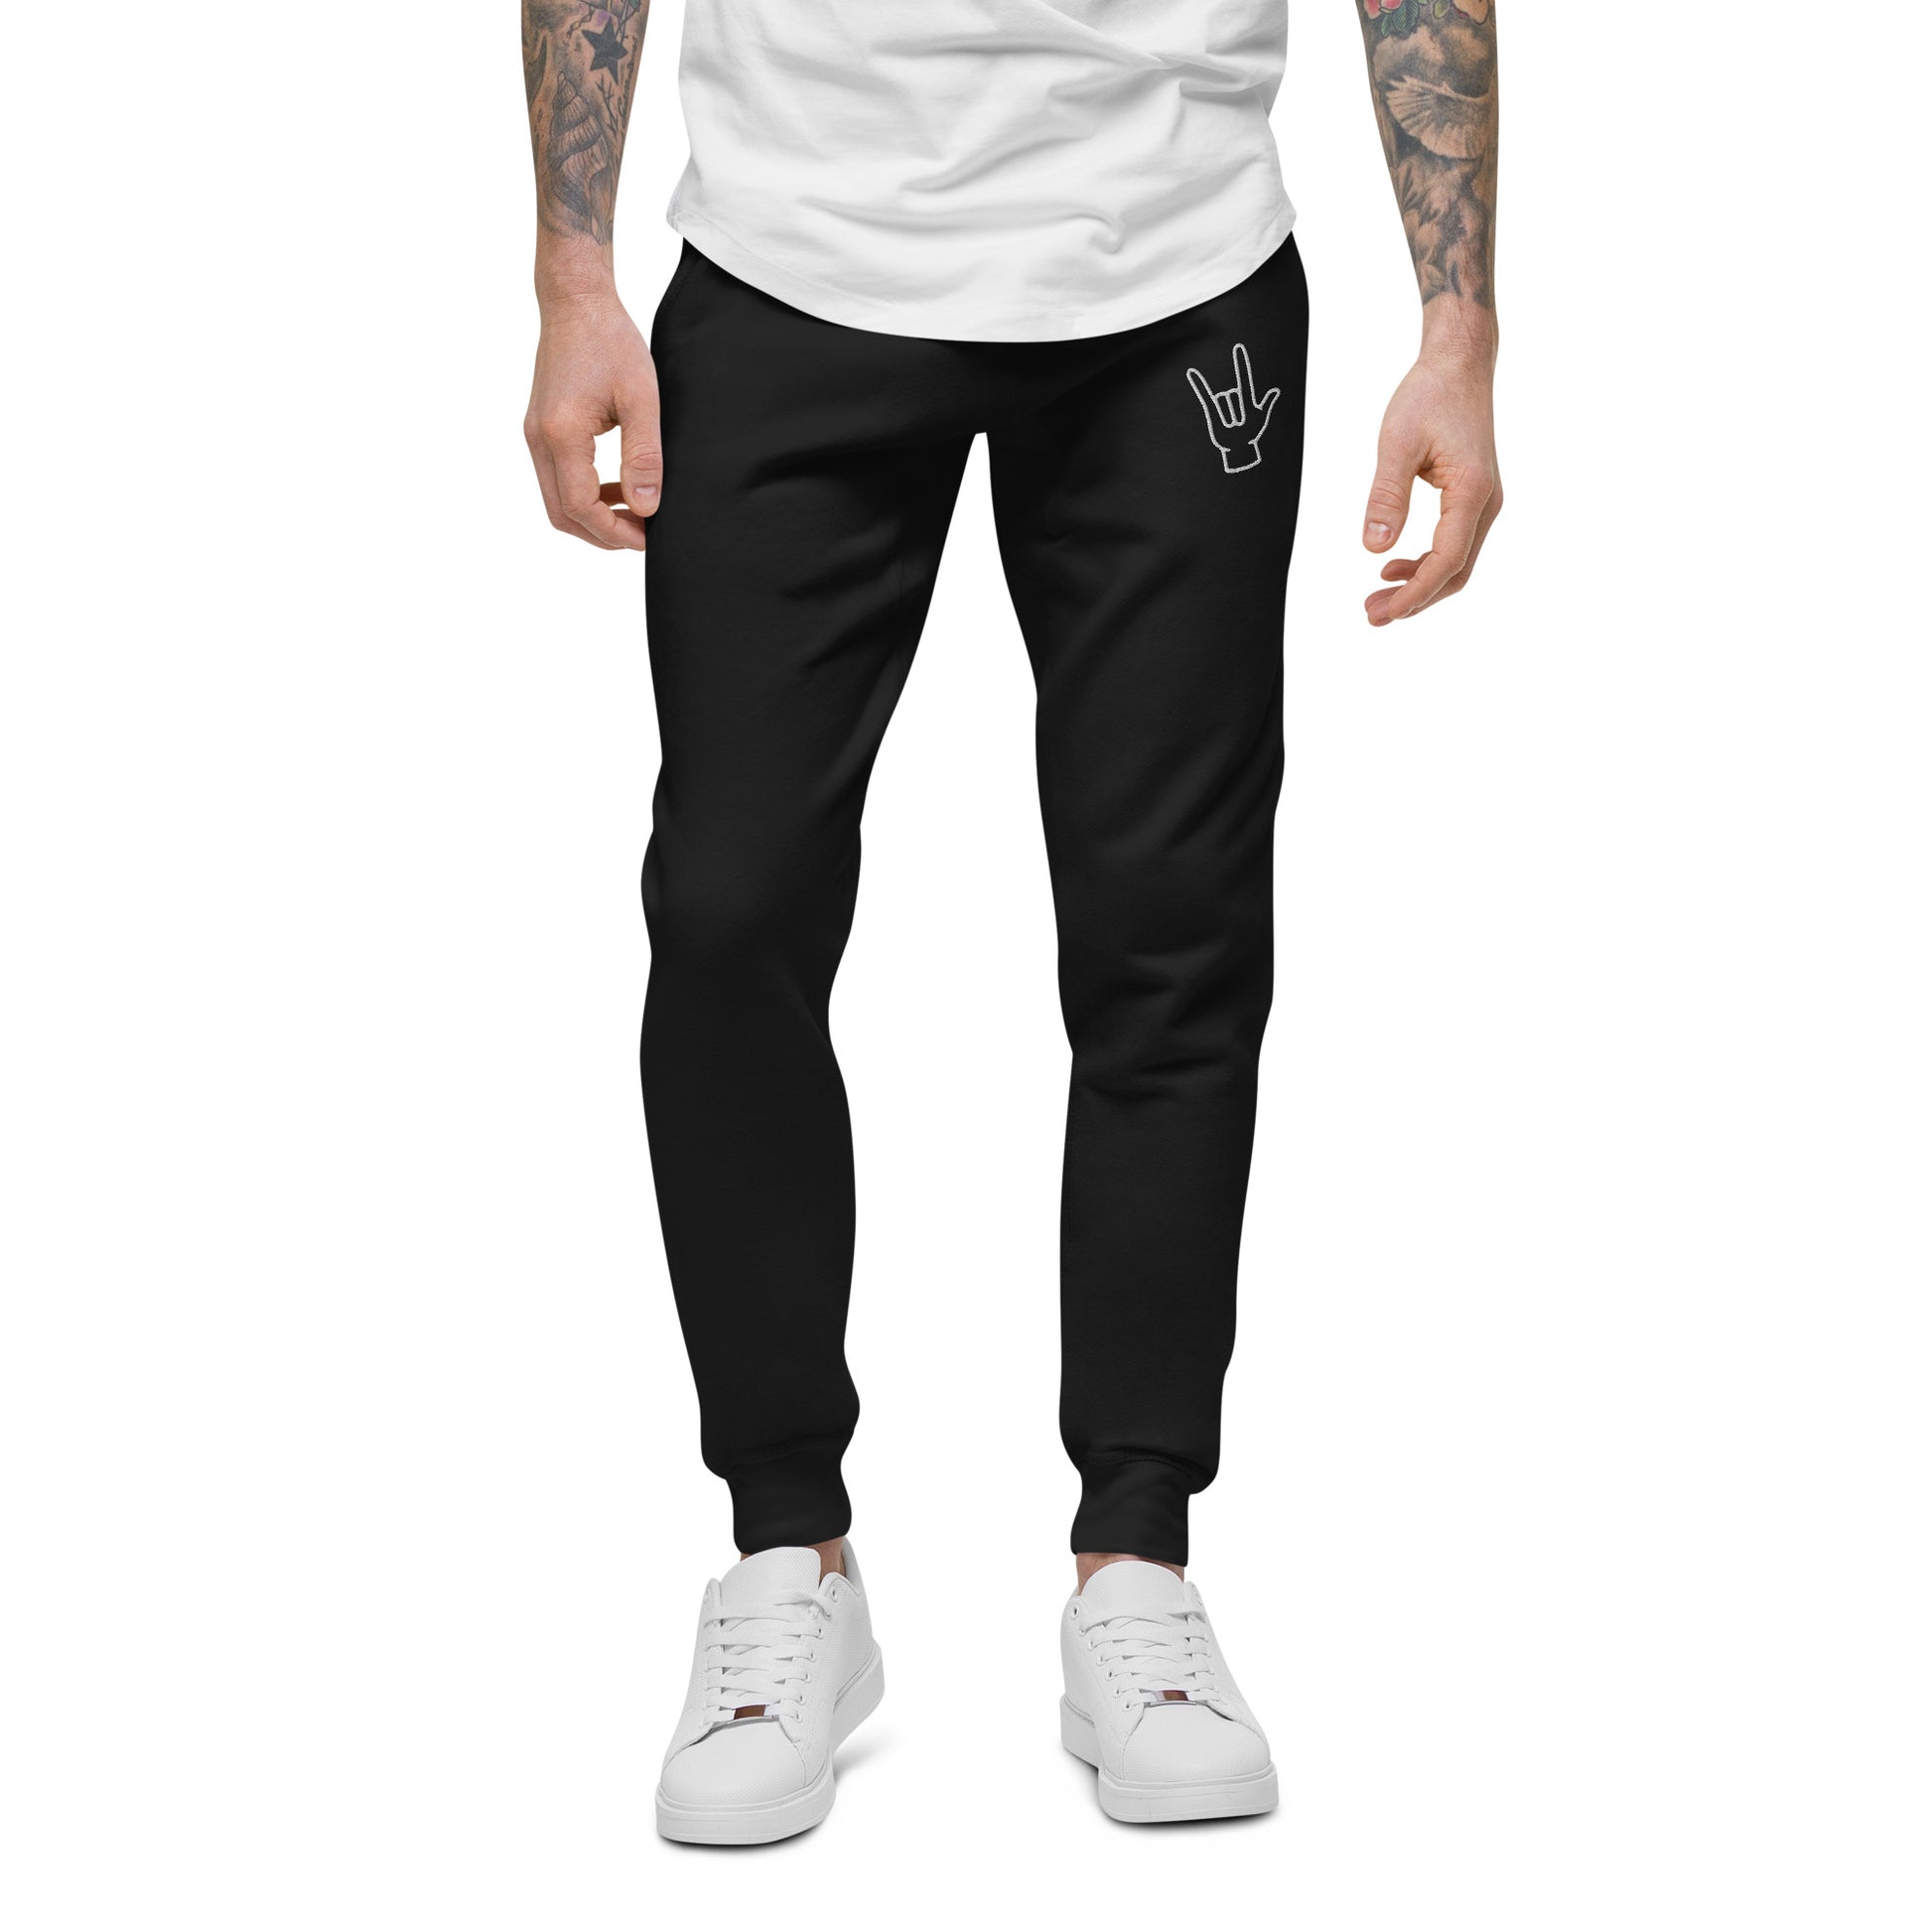 ILY Sweatpants - Comfortable Culture - Black / XL - Pants - Comfortable Culture